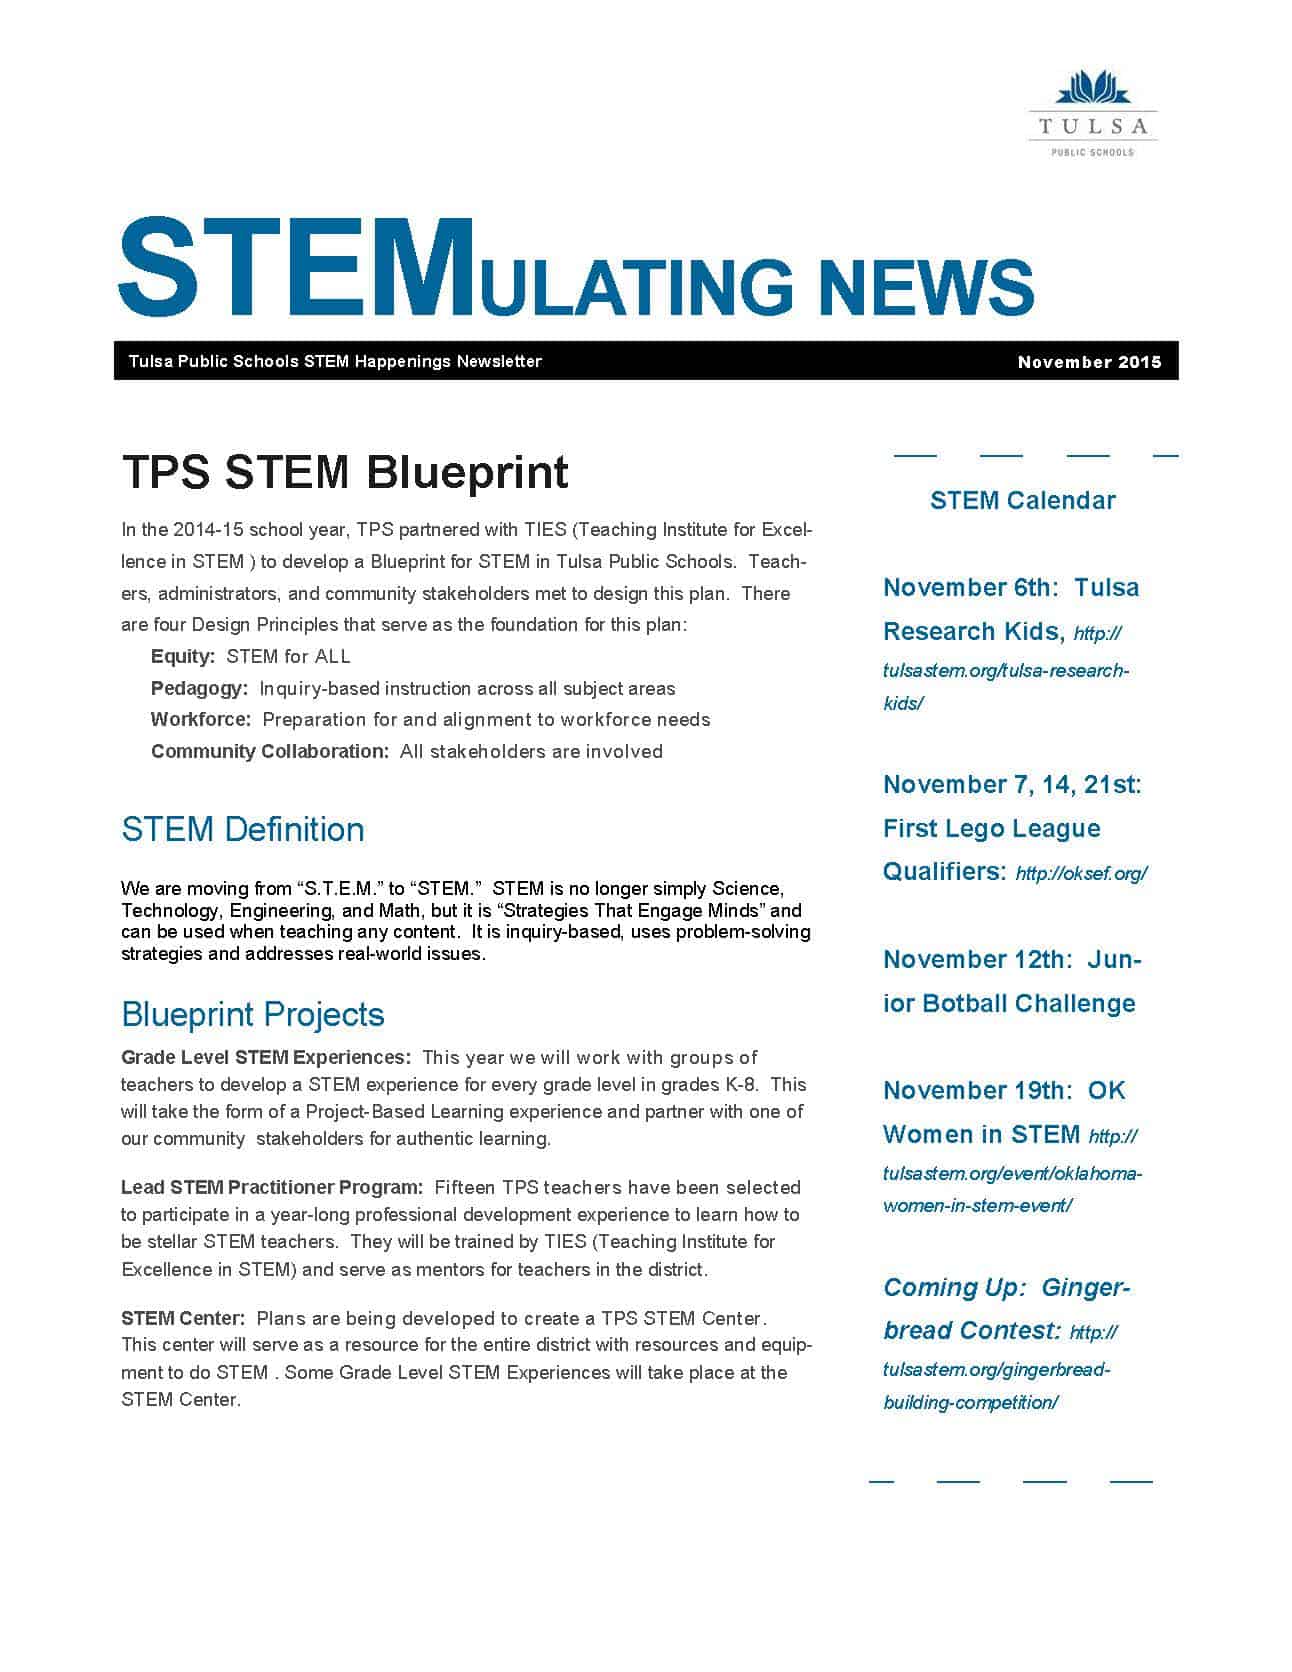 STEMulating News Nov (1)_Page_1